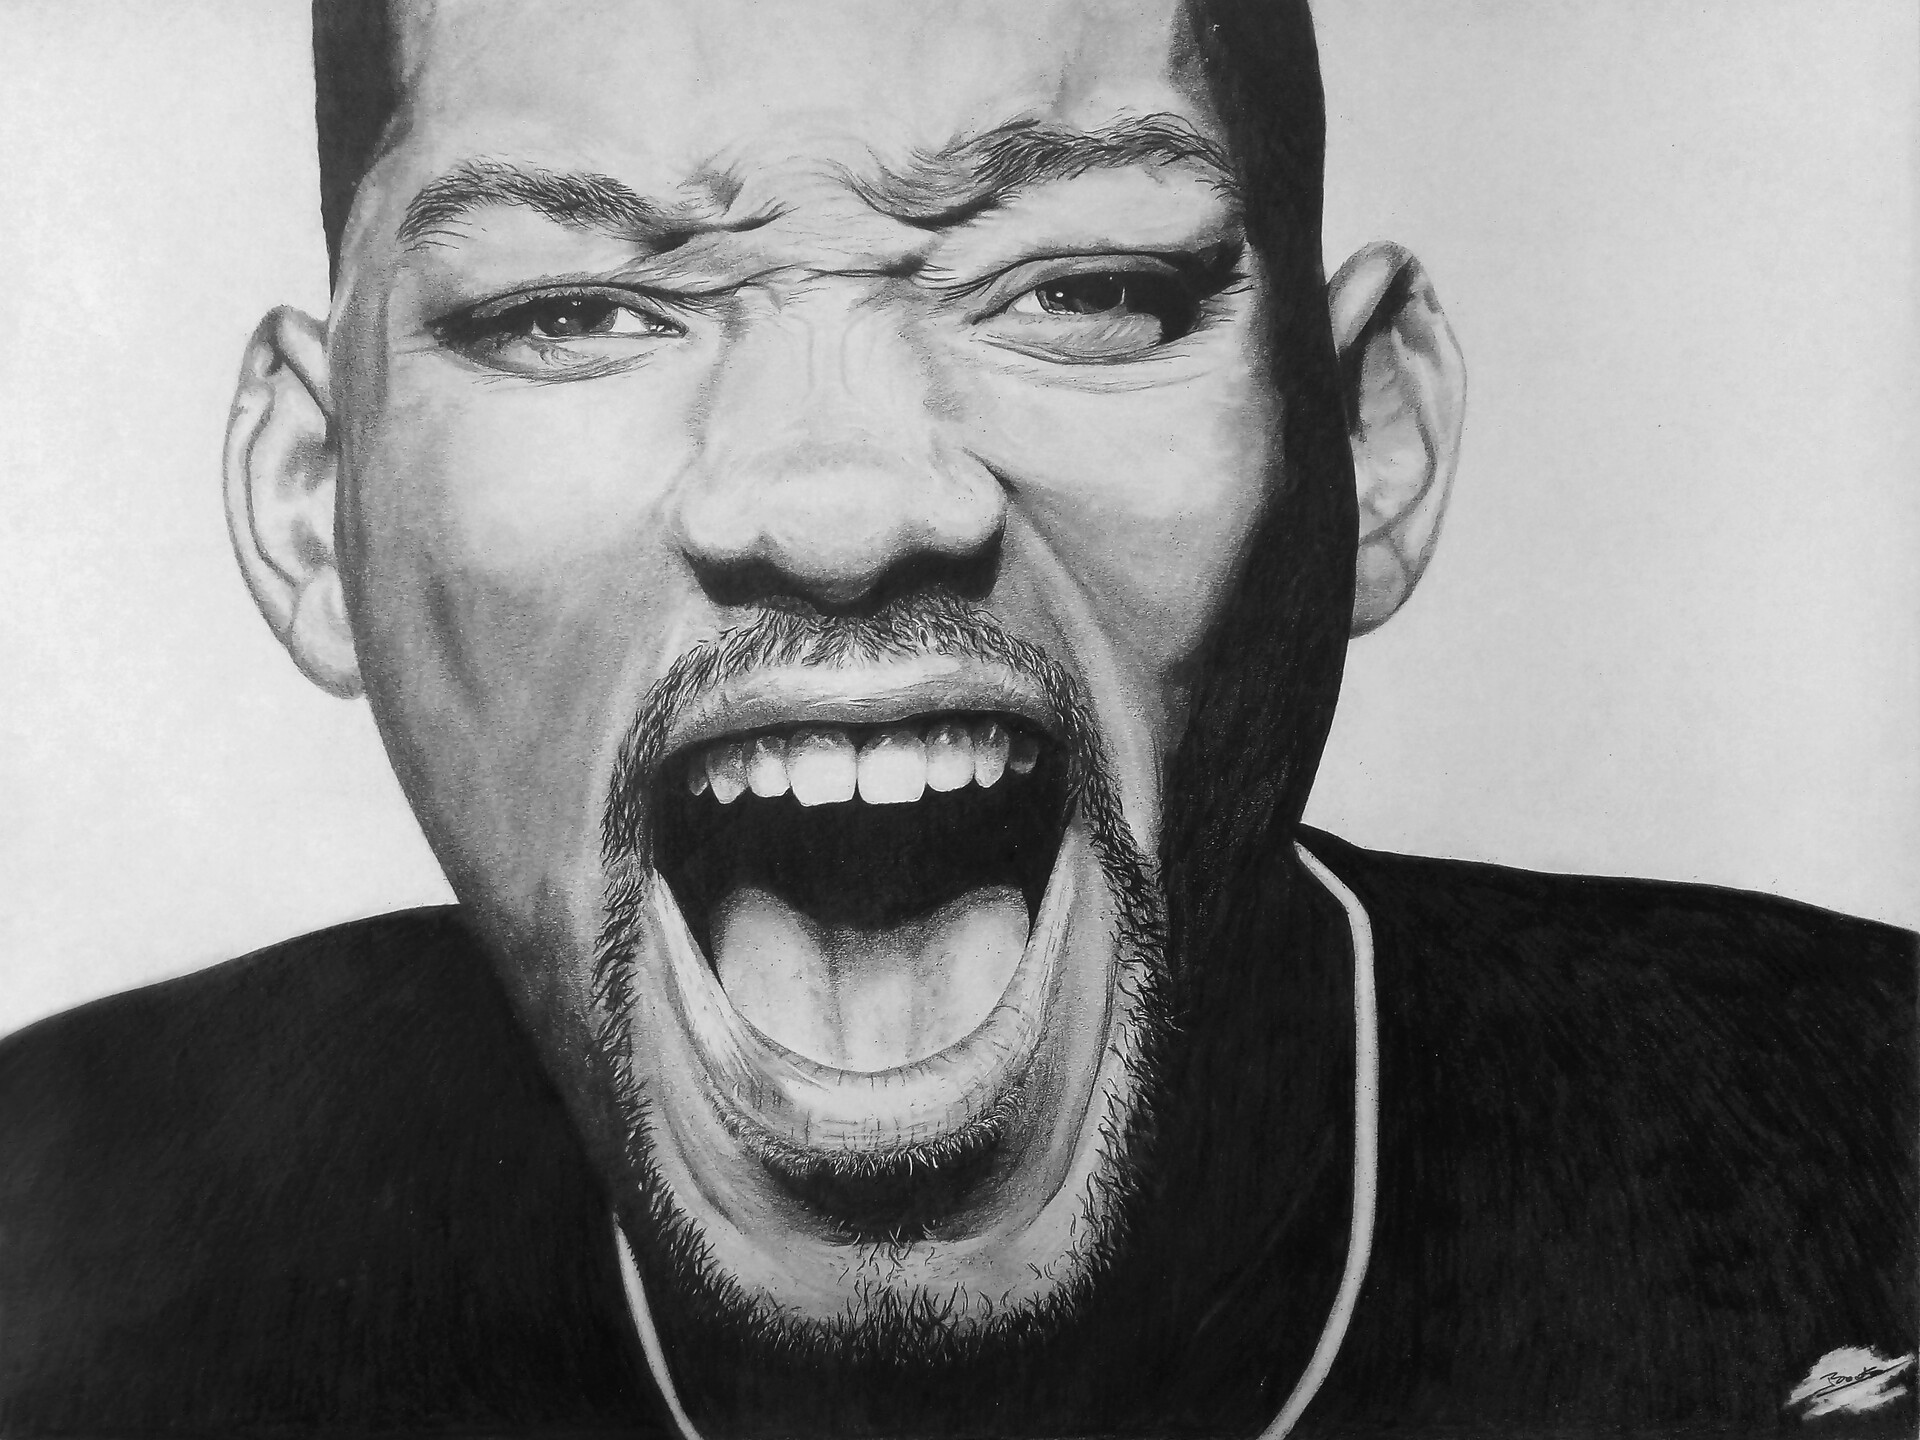 ArtStation - Portrait of Will Smith